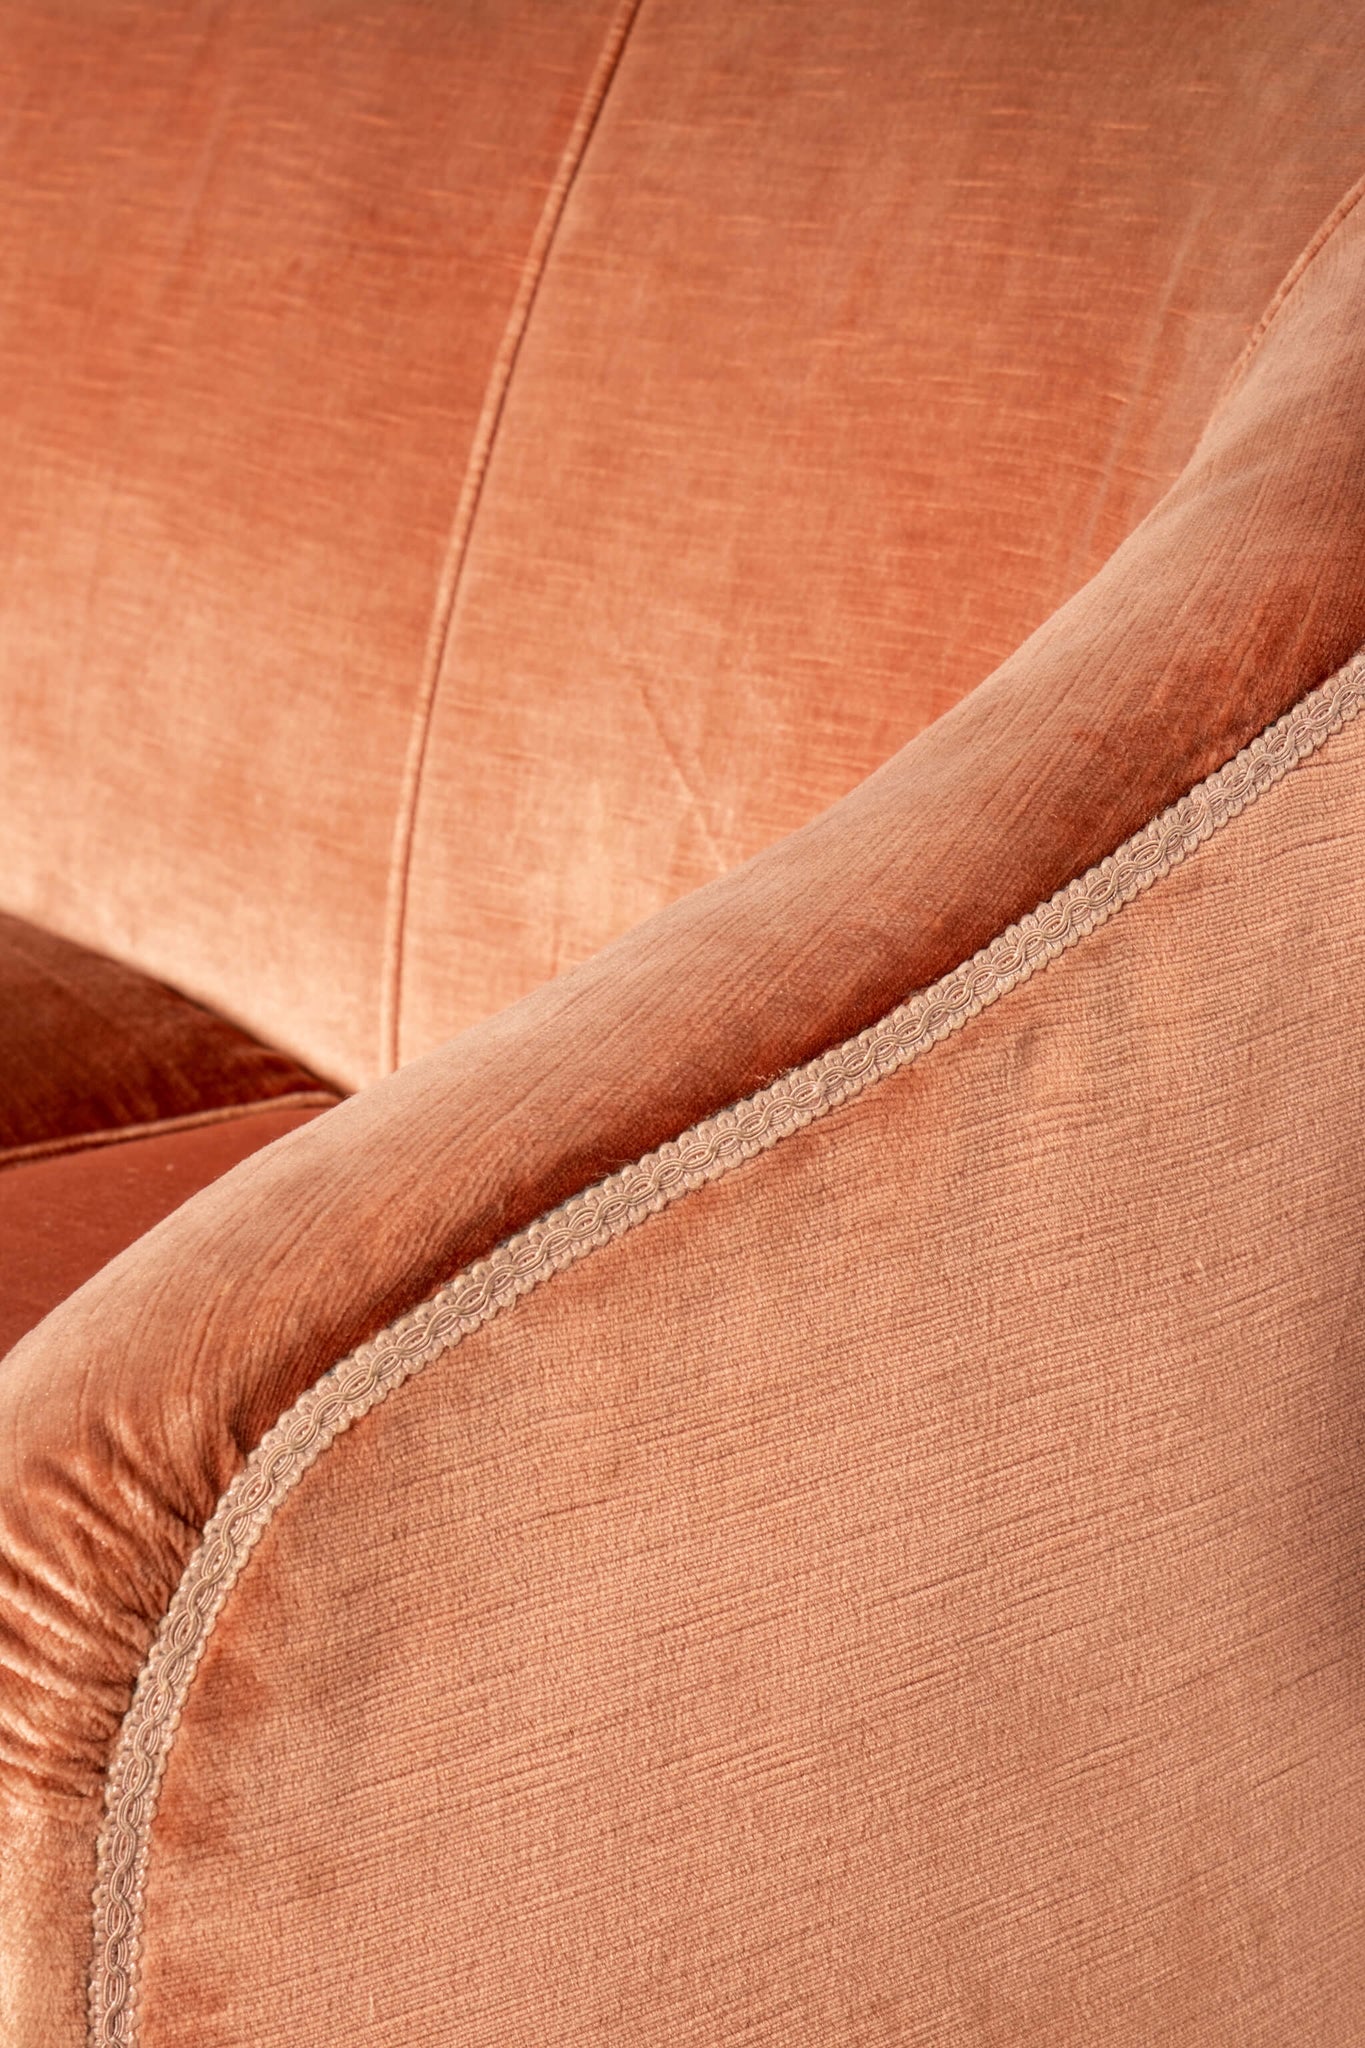 Extremely Rare Vintage Pink Orange Sofa with Curved Frame Detail Casa Giardino Gio Ponti, armrest detail